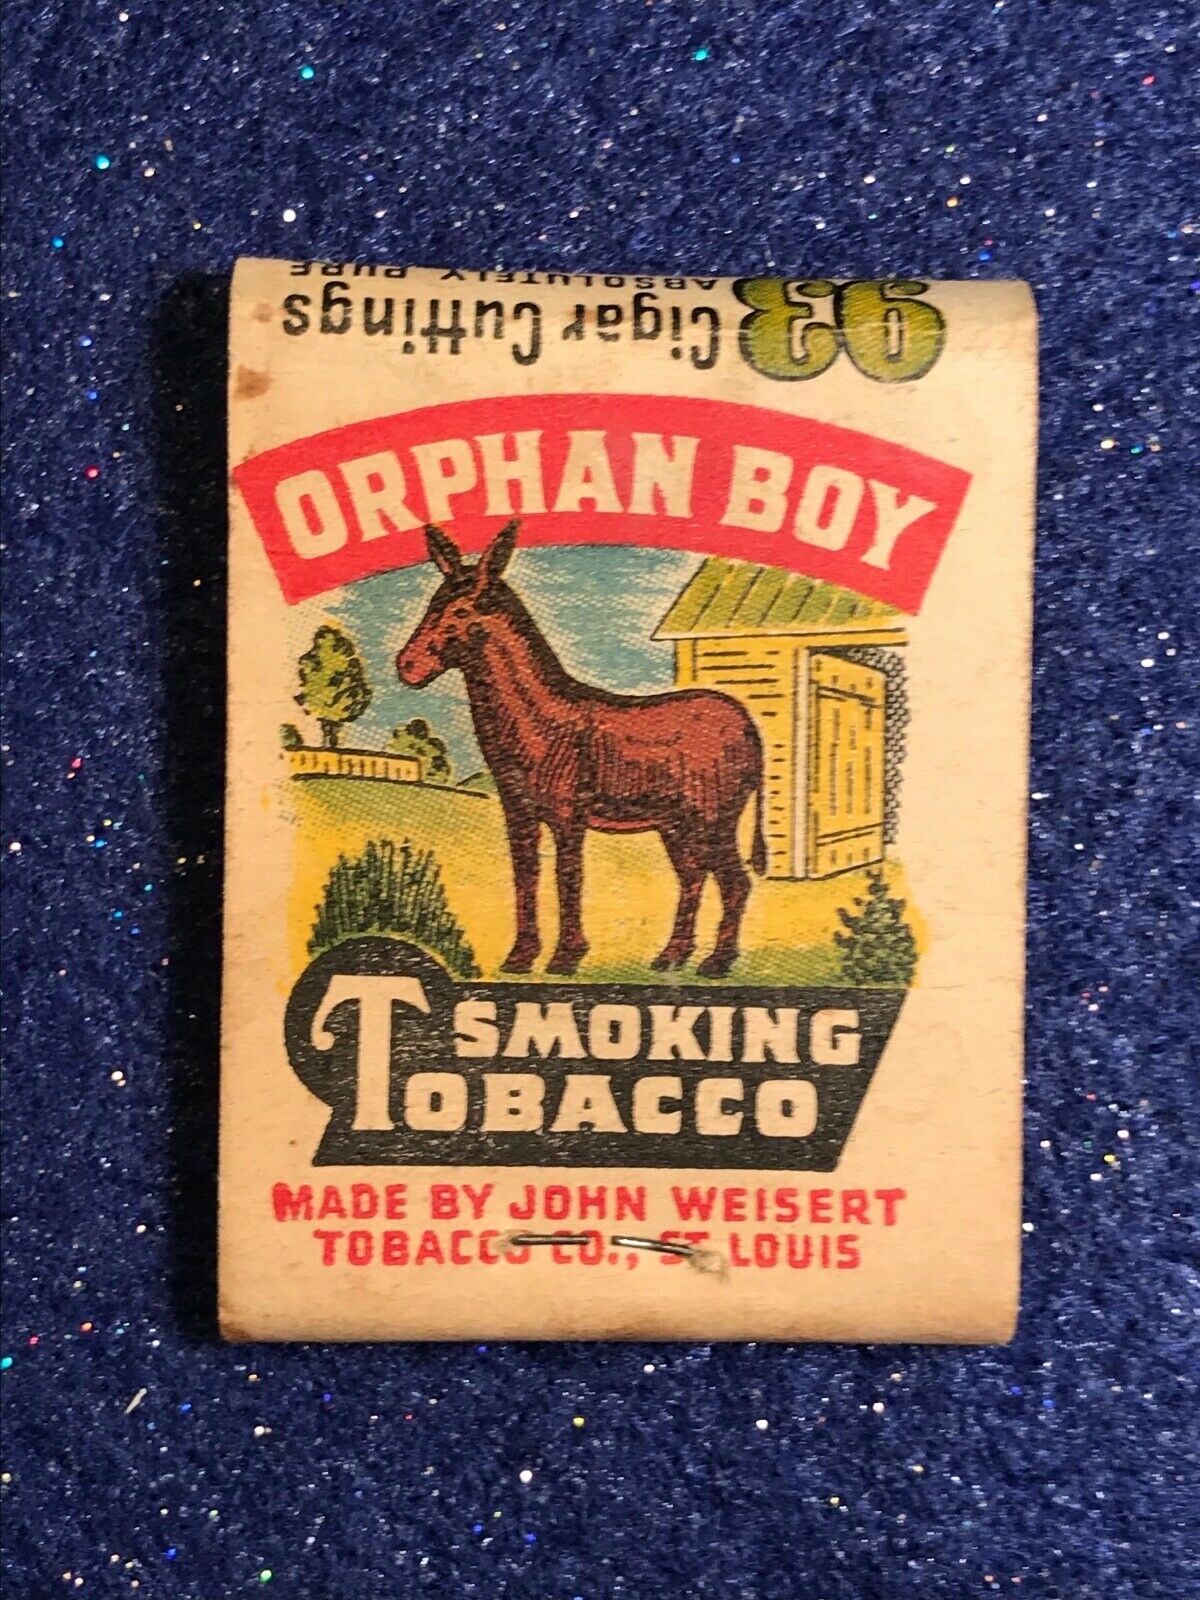 93 Cuttings "orphan Boy Tobacco" Matchbook